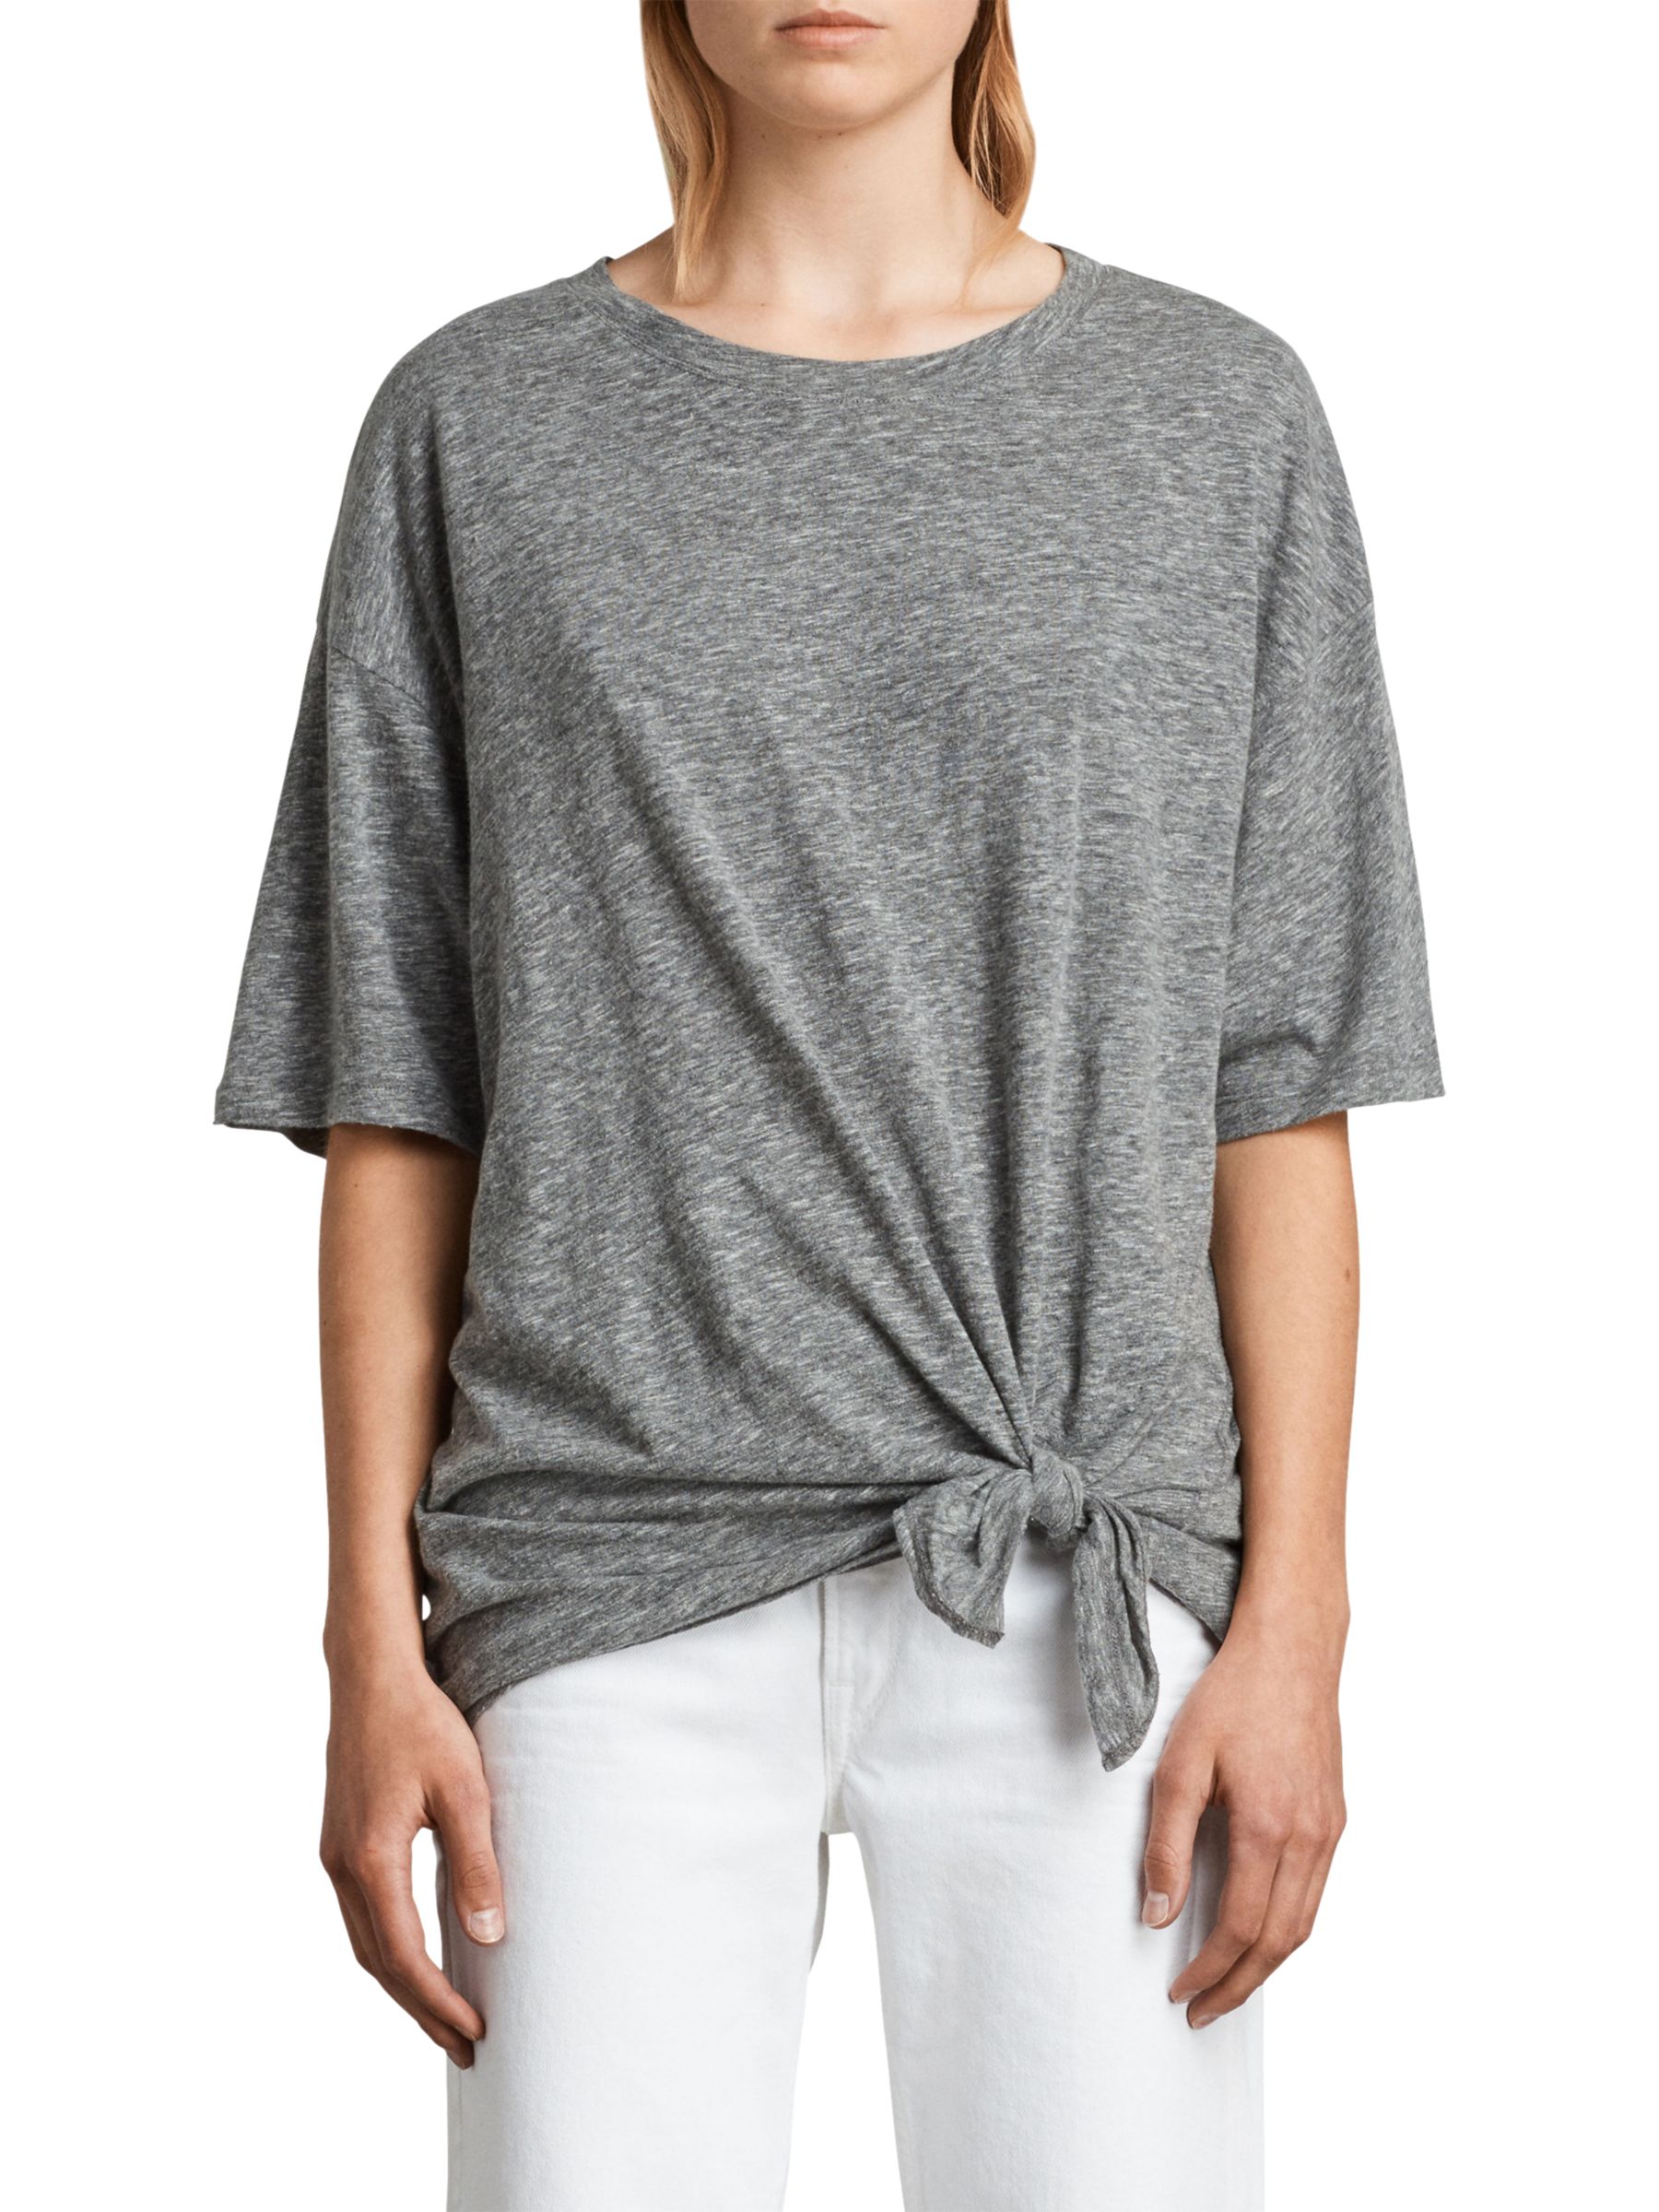 AllSaints Meli Flame T-Shirt, Cinder Marl